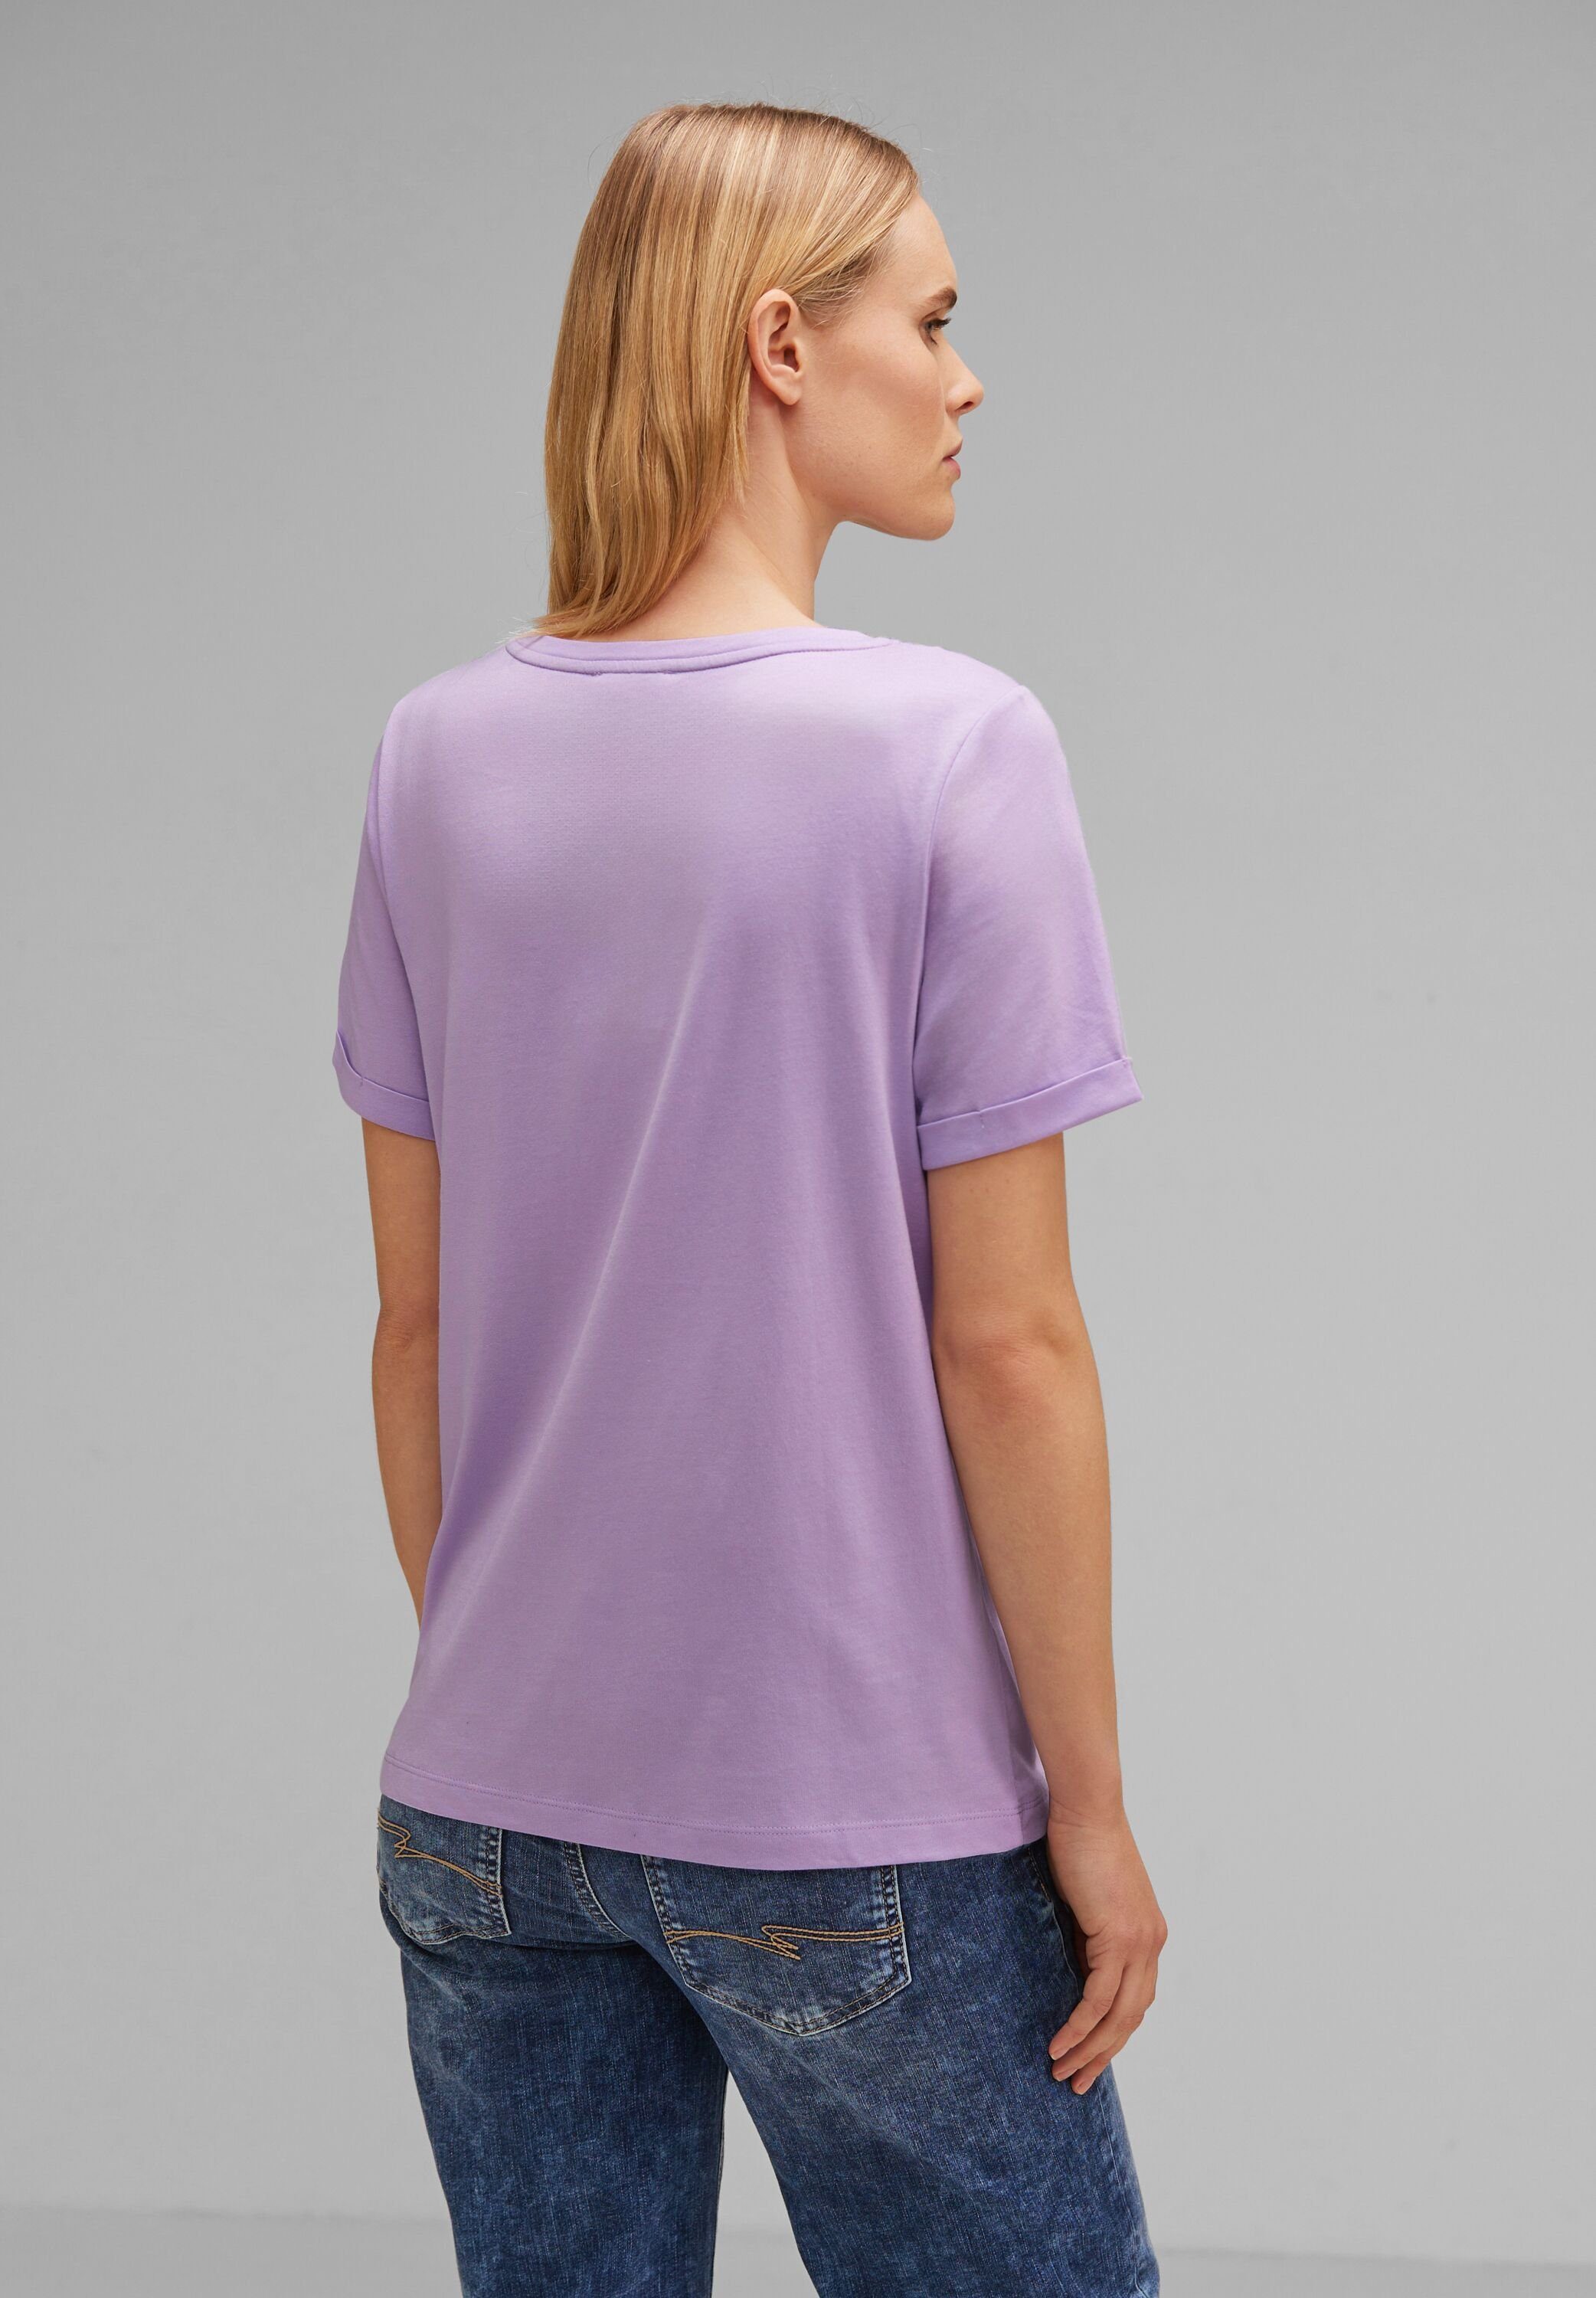 ONE T-Shirt lilac STREET pure soft